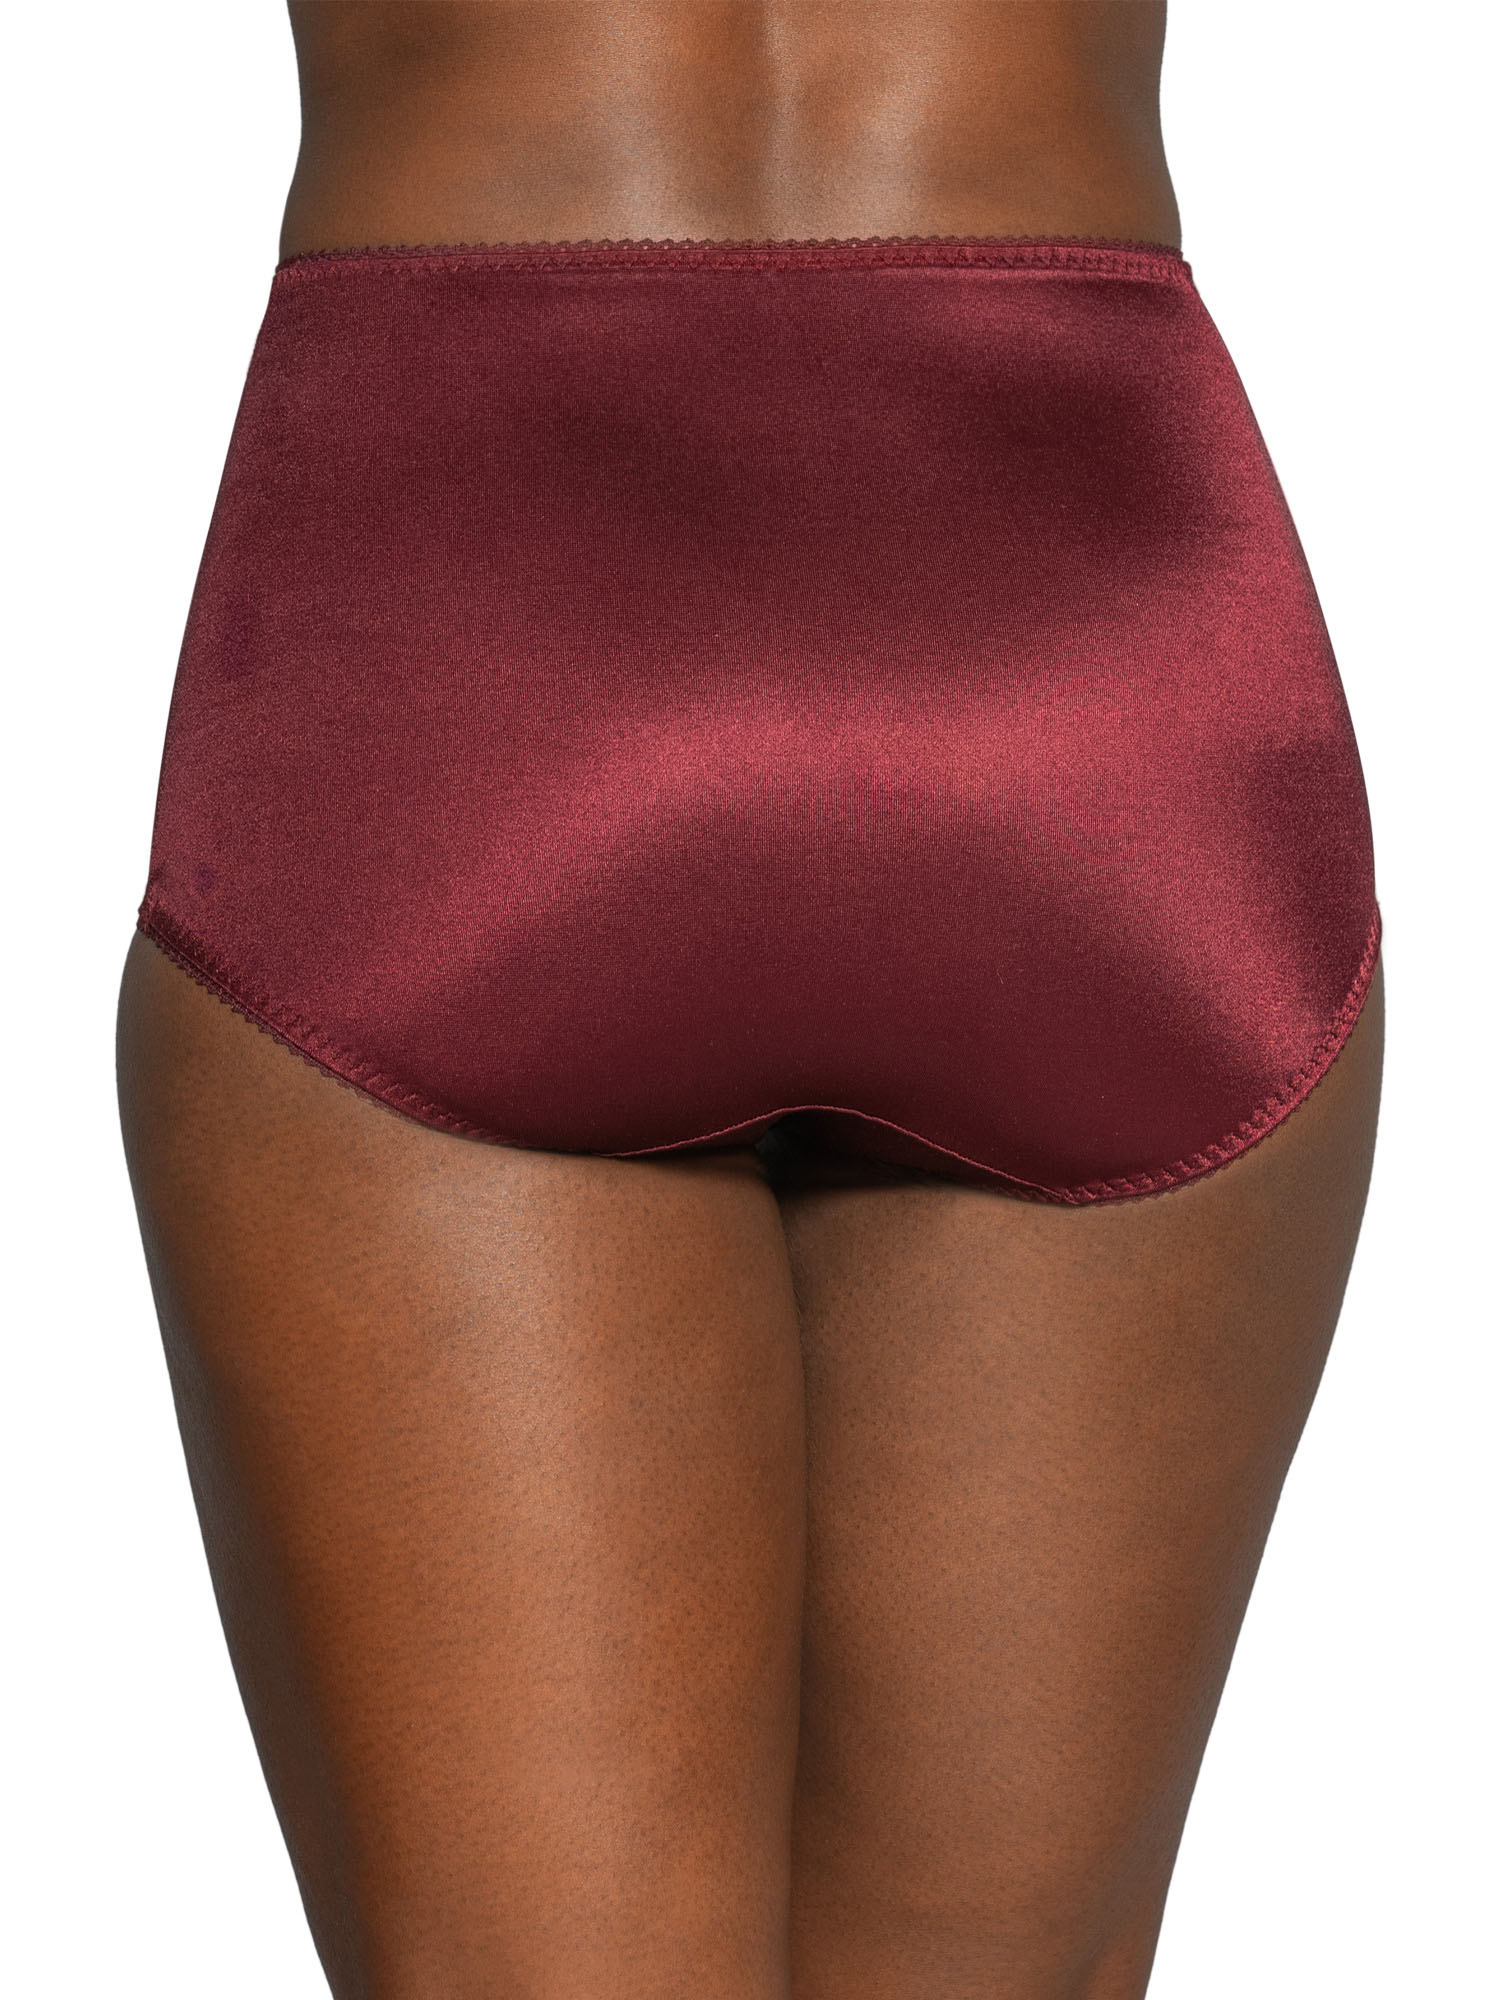 Vanity Fair Radiant Collection Women's Undershapers Brief Underwear, 3 Pack - image 4 of 12